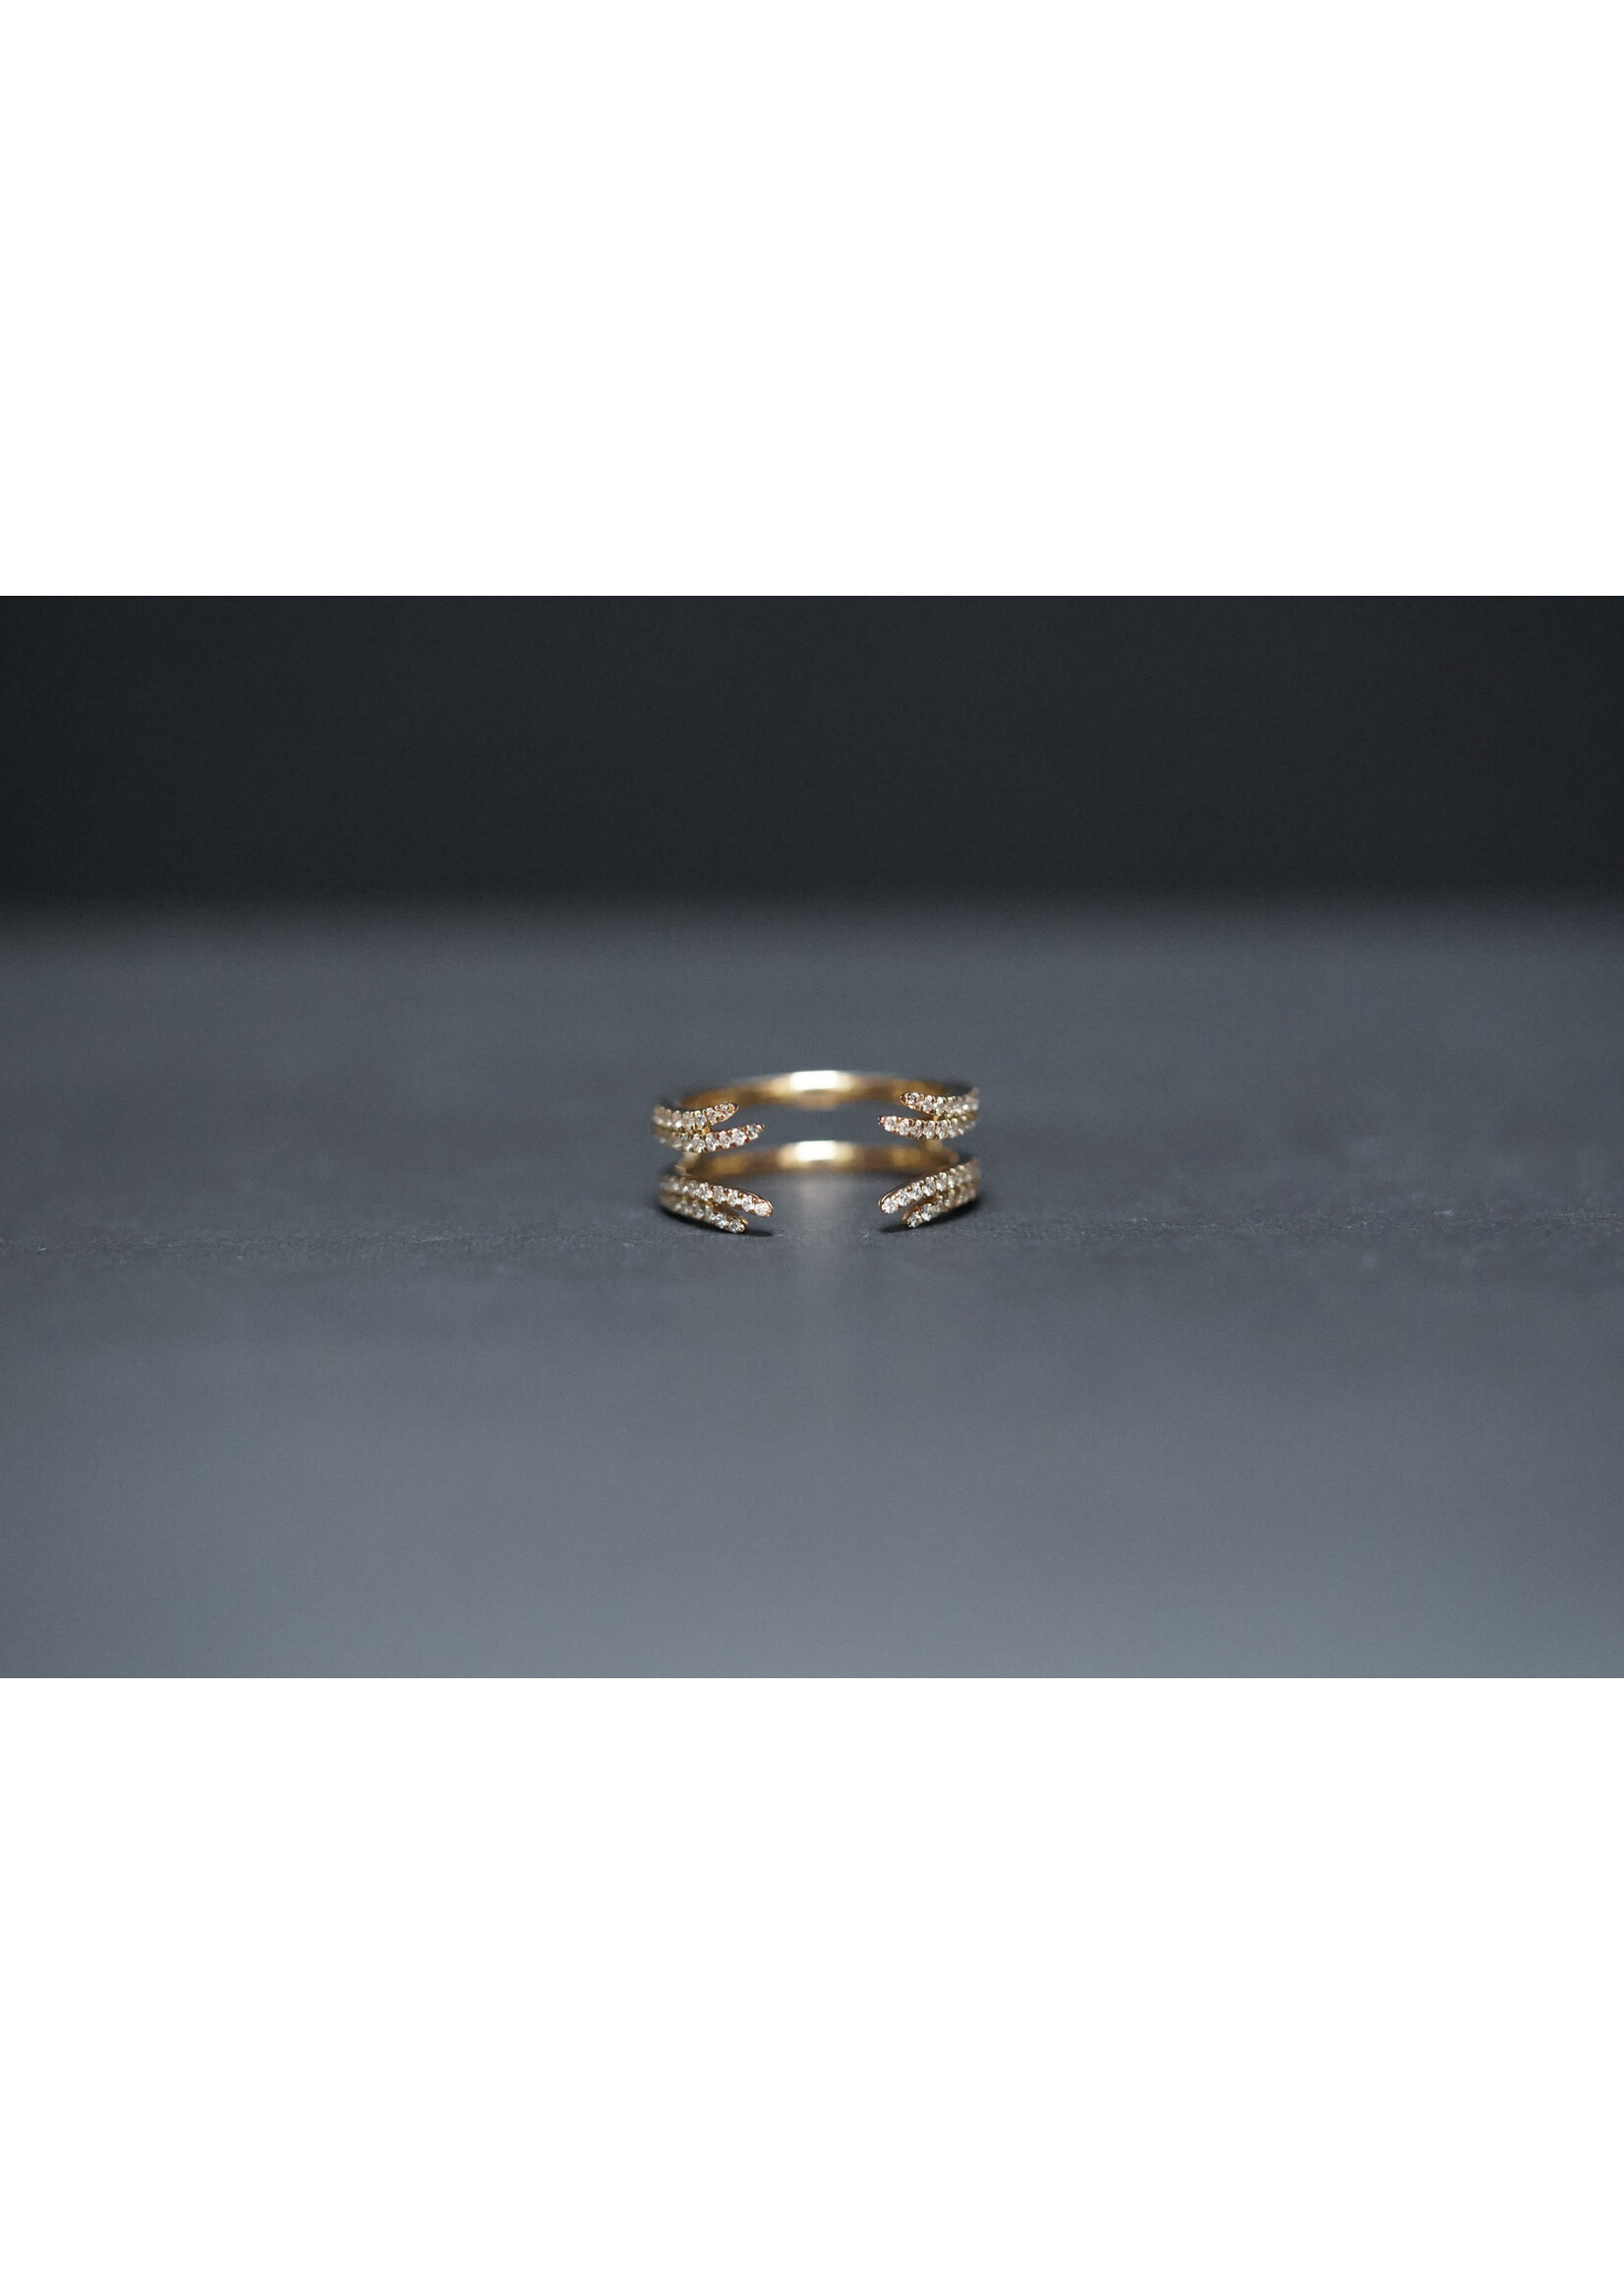 14KY 4.39g .34ctw Diamond Ring Enhancer (size 7)